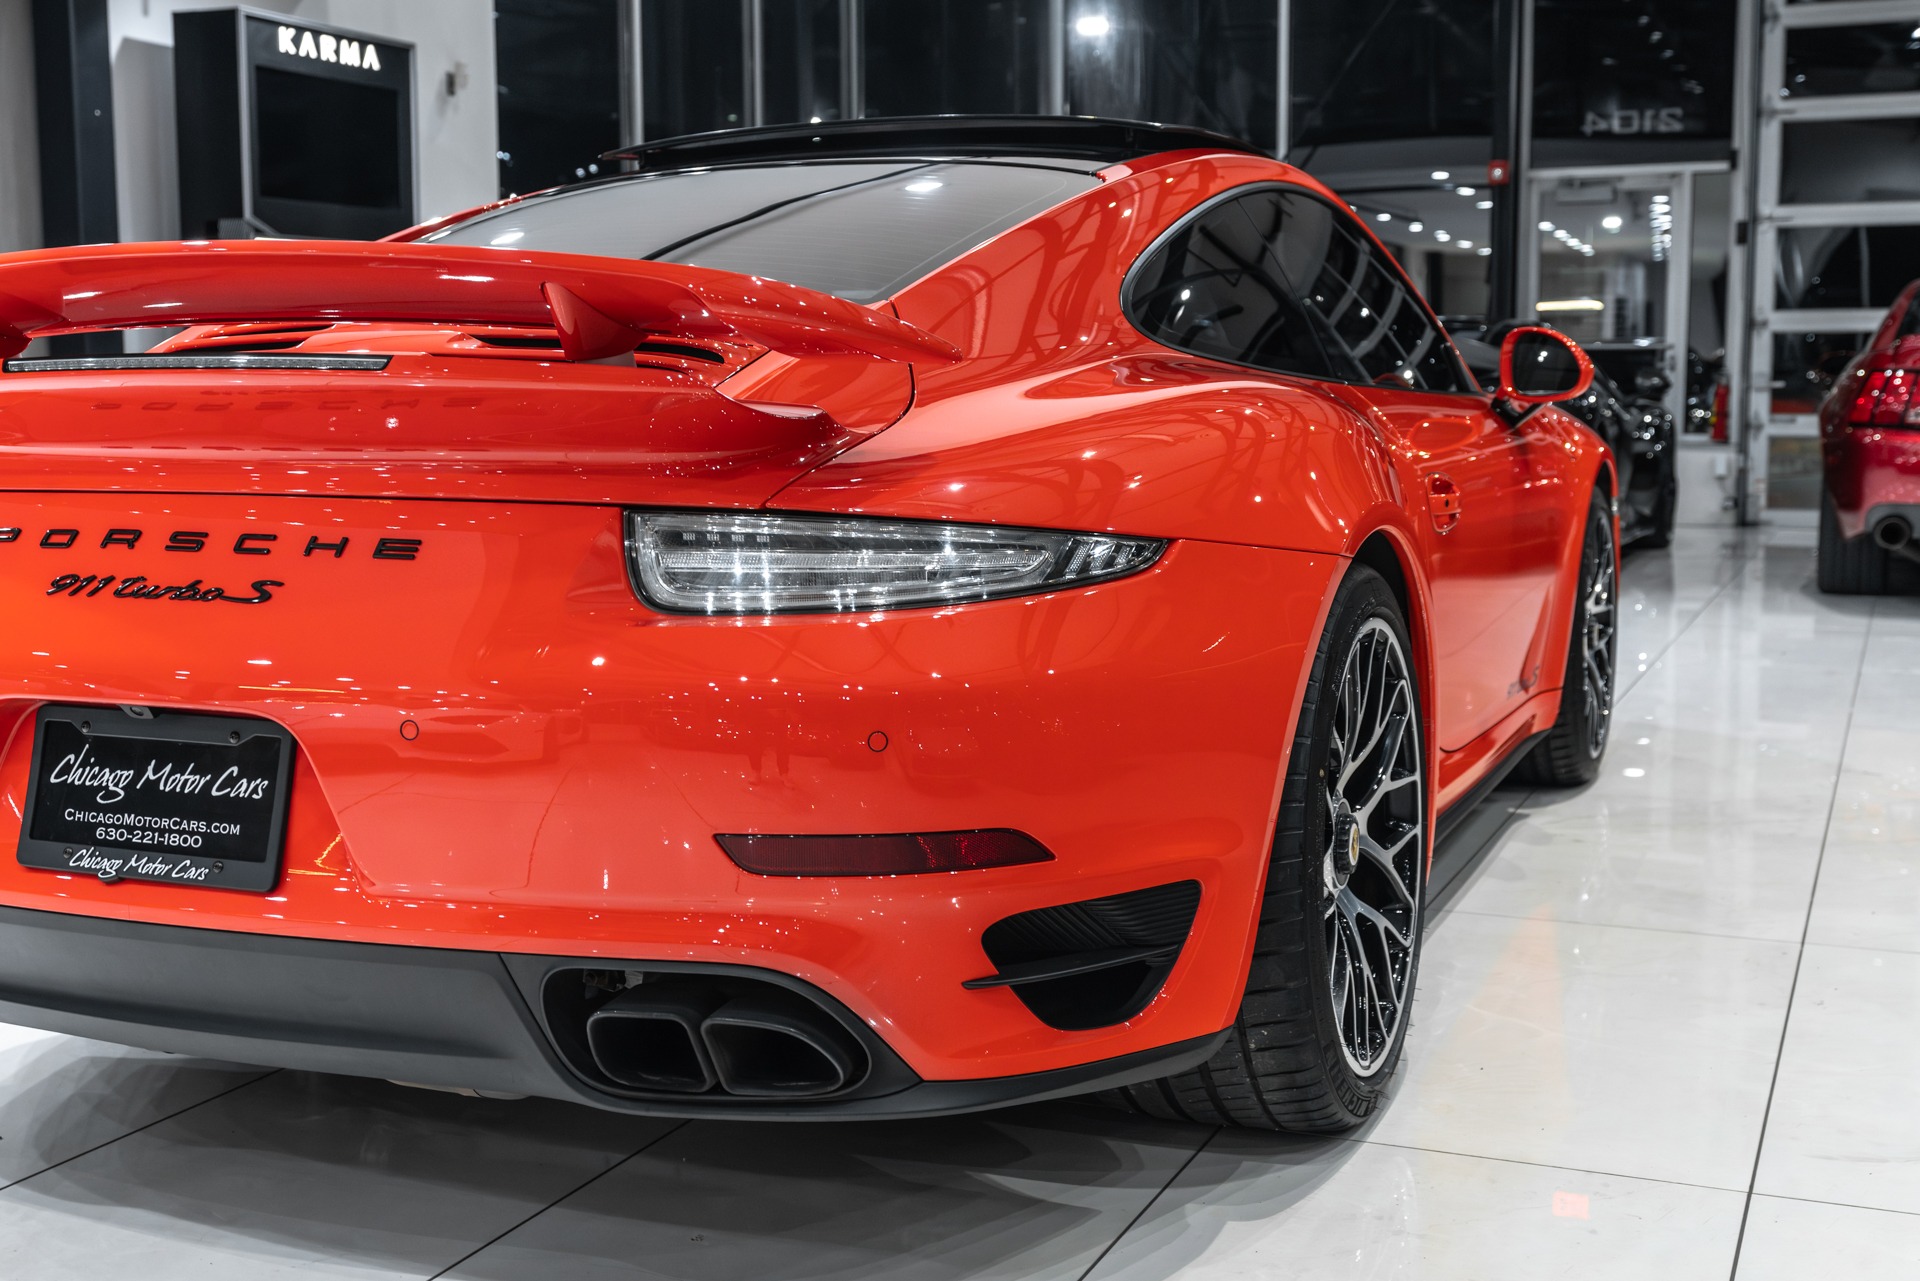 Used-2016-Porsche-911-Turbo-S-Coupe-MSRP-196685-Lava-Orange-Cobb-Tune-Soul-Exhaust